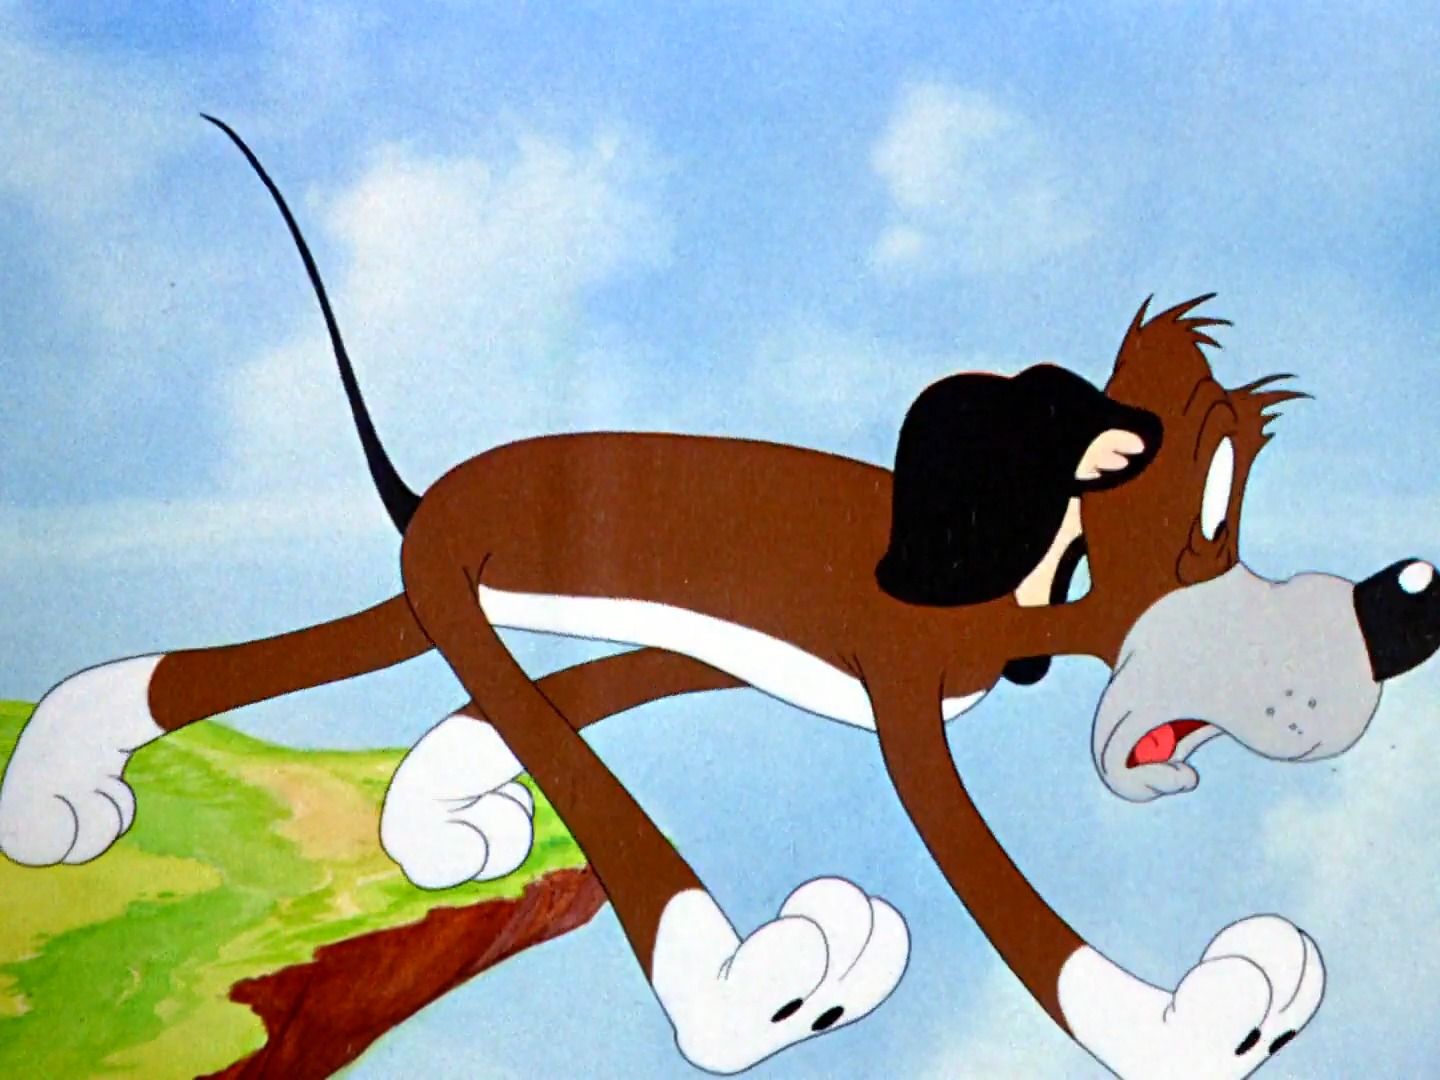 Did a Risqu Bugs Bunny Joke Get Legendary Animator Tex Avery Suspended?